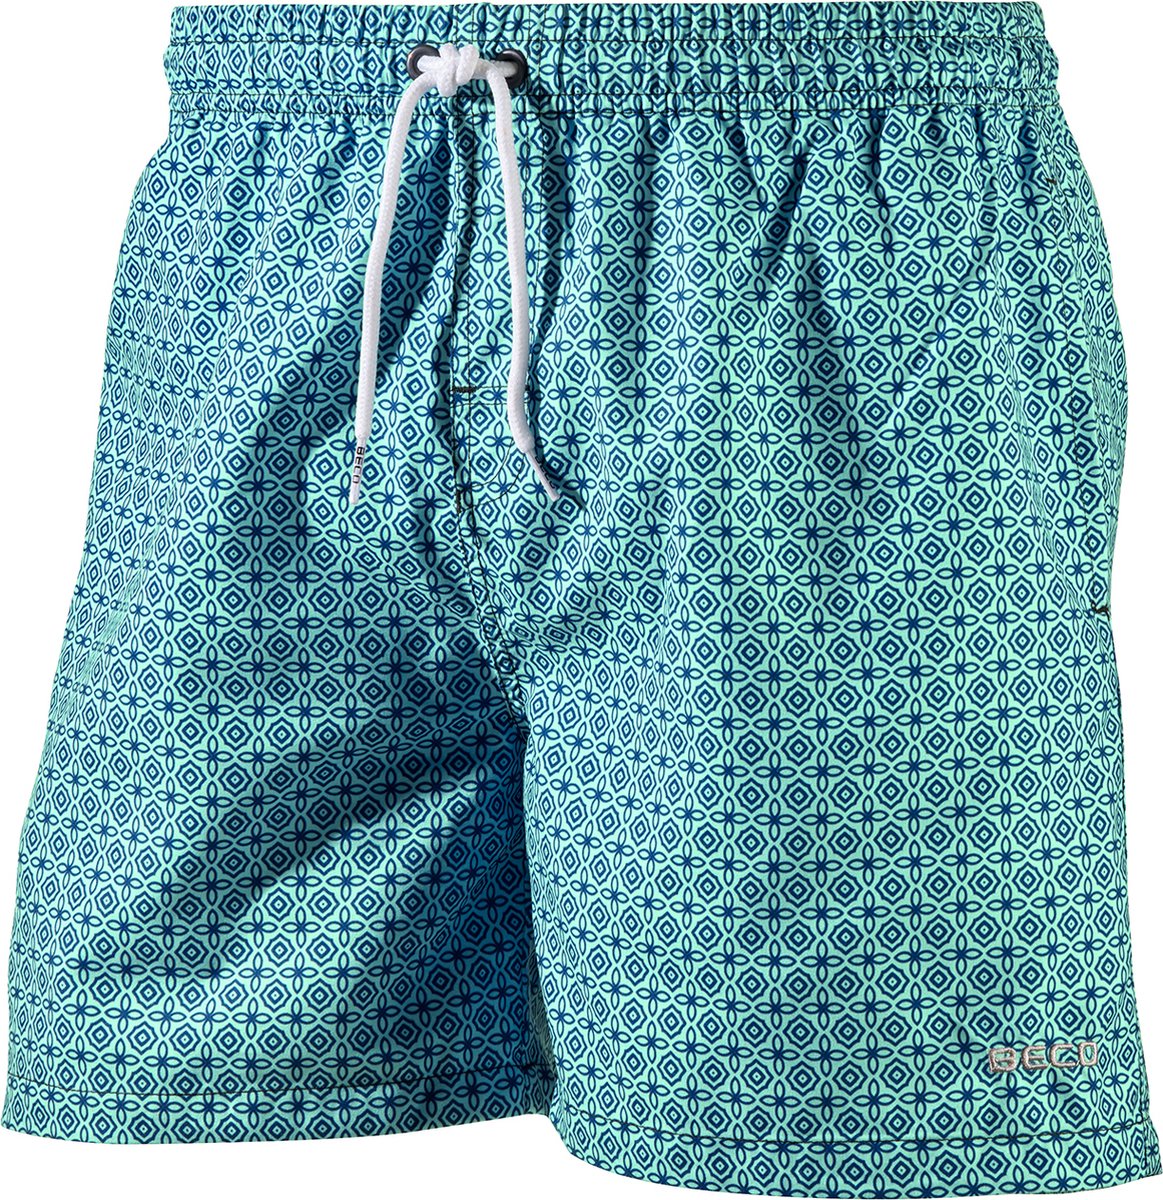 BECO shorts, binnenbroekje, elastische band, lengte 42 cm, 3 zakjes, mint groen, maat L.